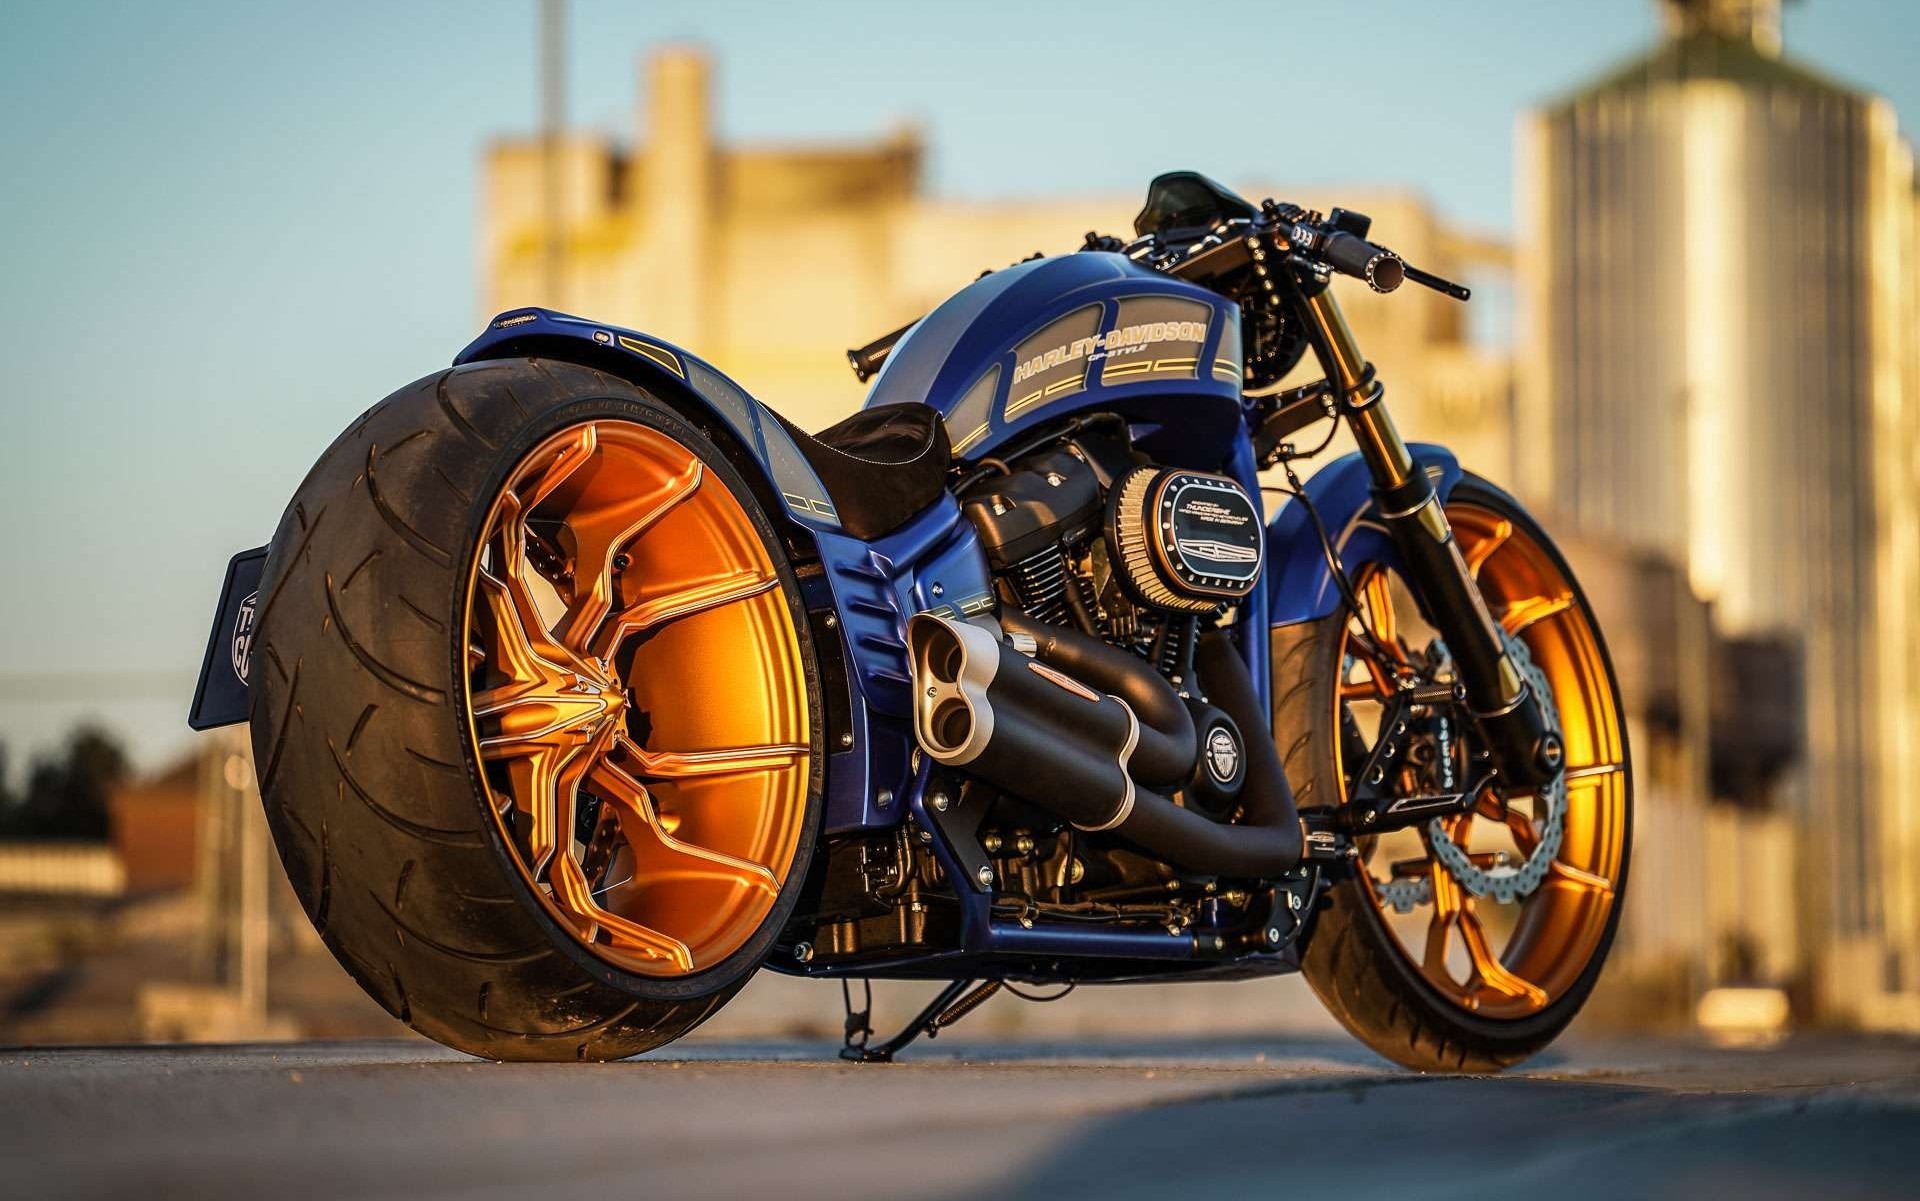 Бесплатное фото Мотоцикл Harley davidson на заказ